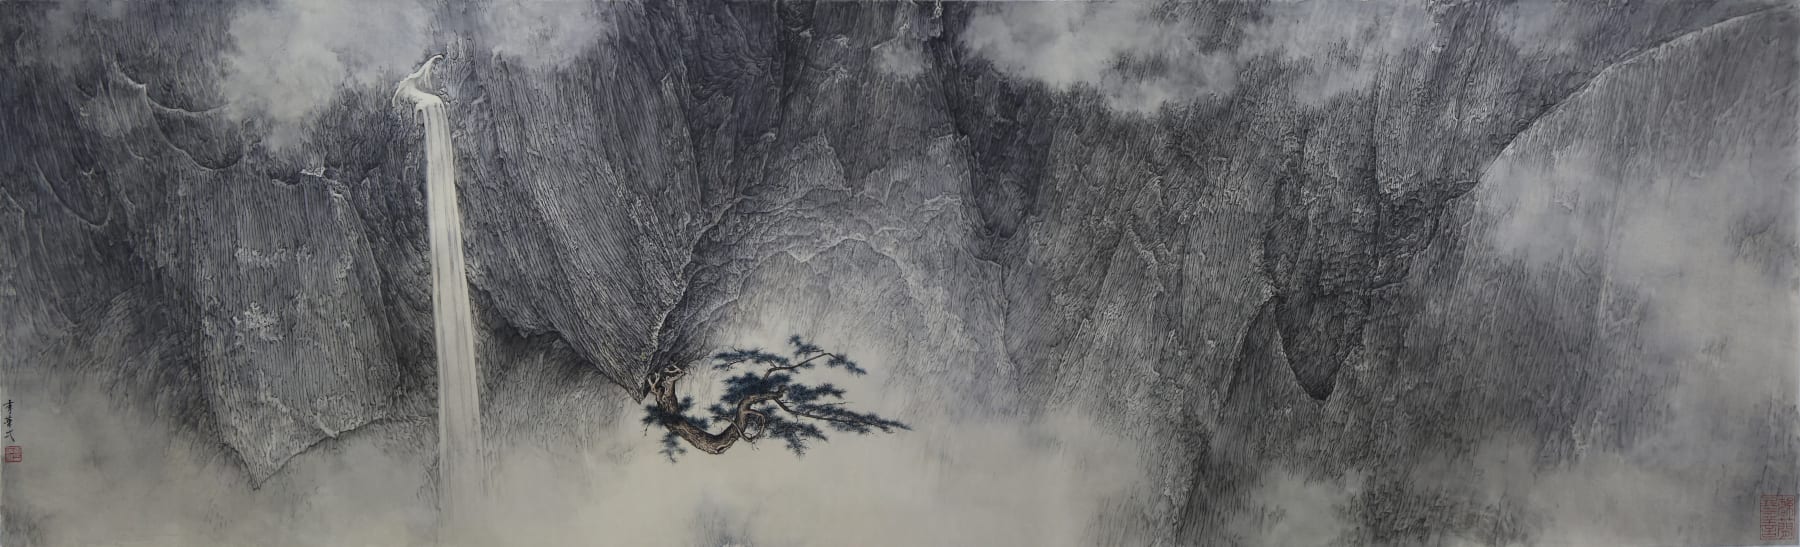 Li Huayi 李華弌, Pine and Flying Waterfall《蒼松飛瀑》, 2012